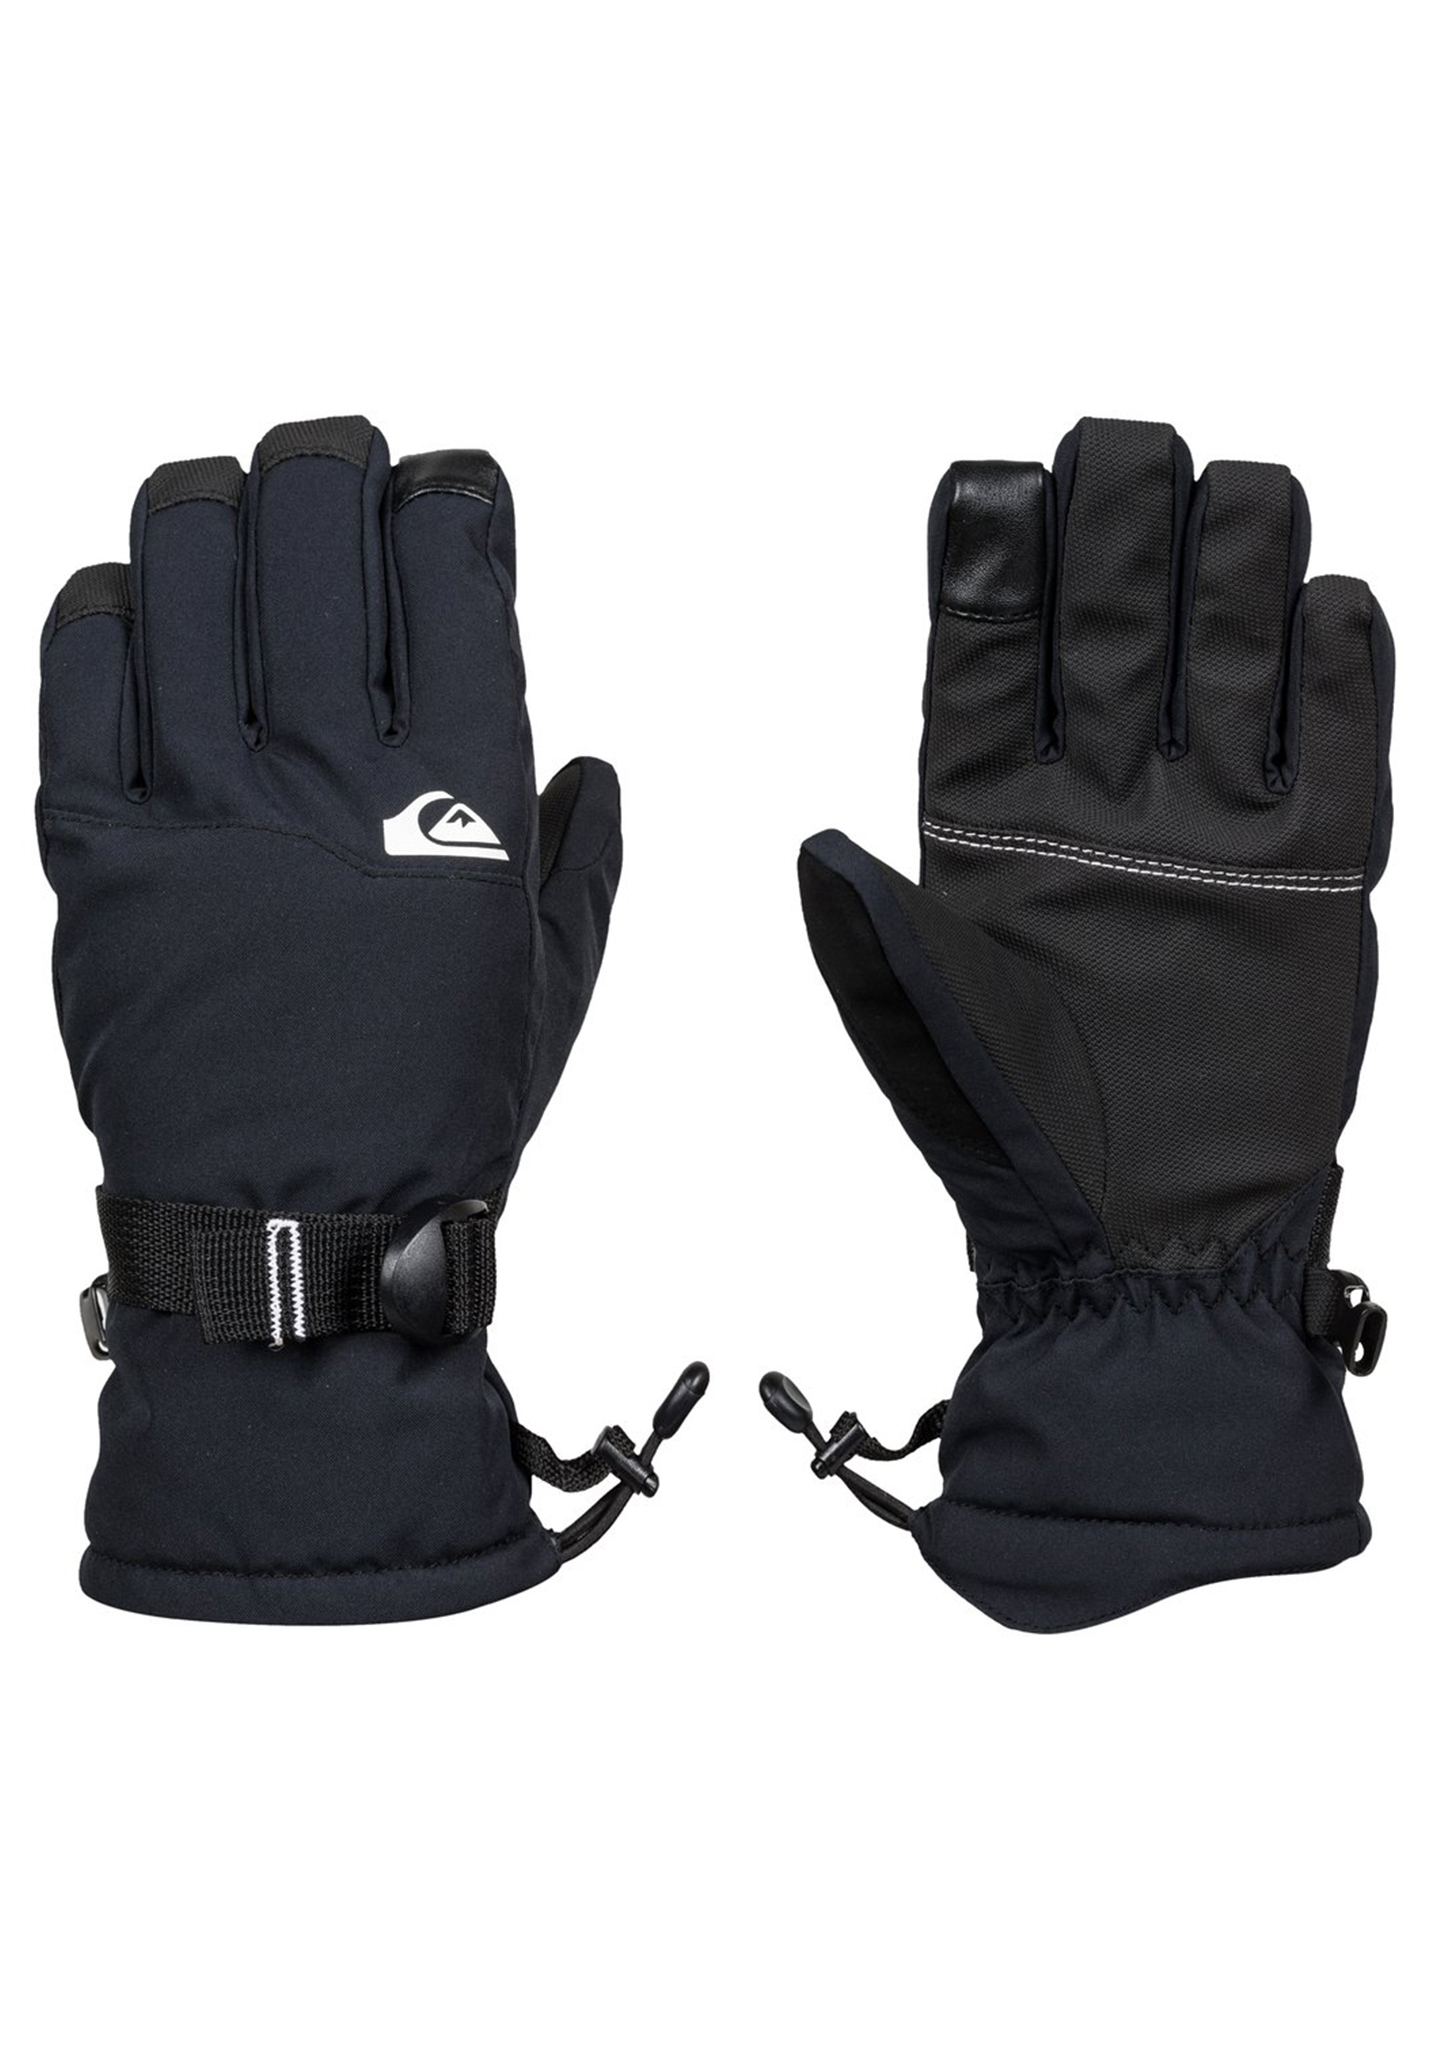 Quiksilver Mission Mitt Snowboard Handschuhe true black L